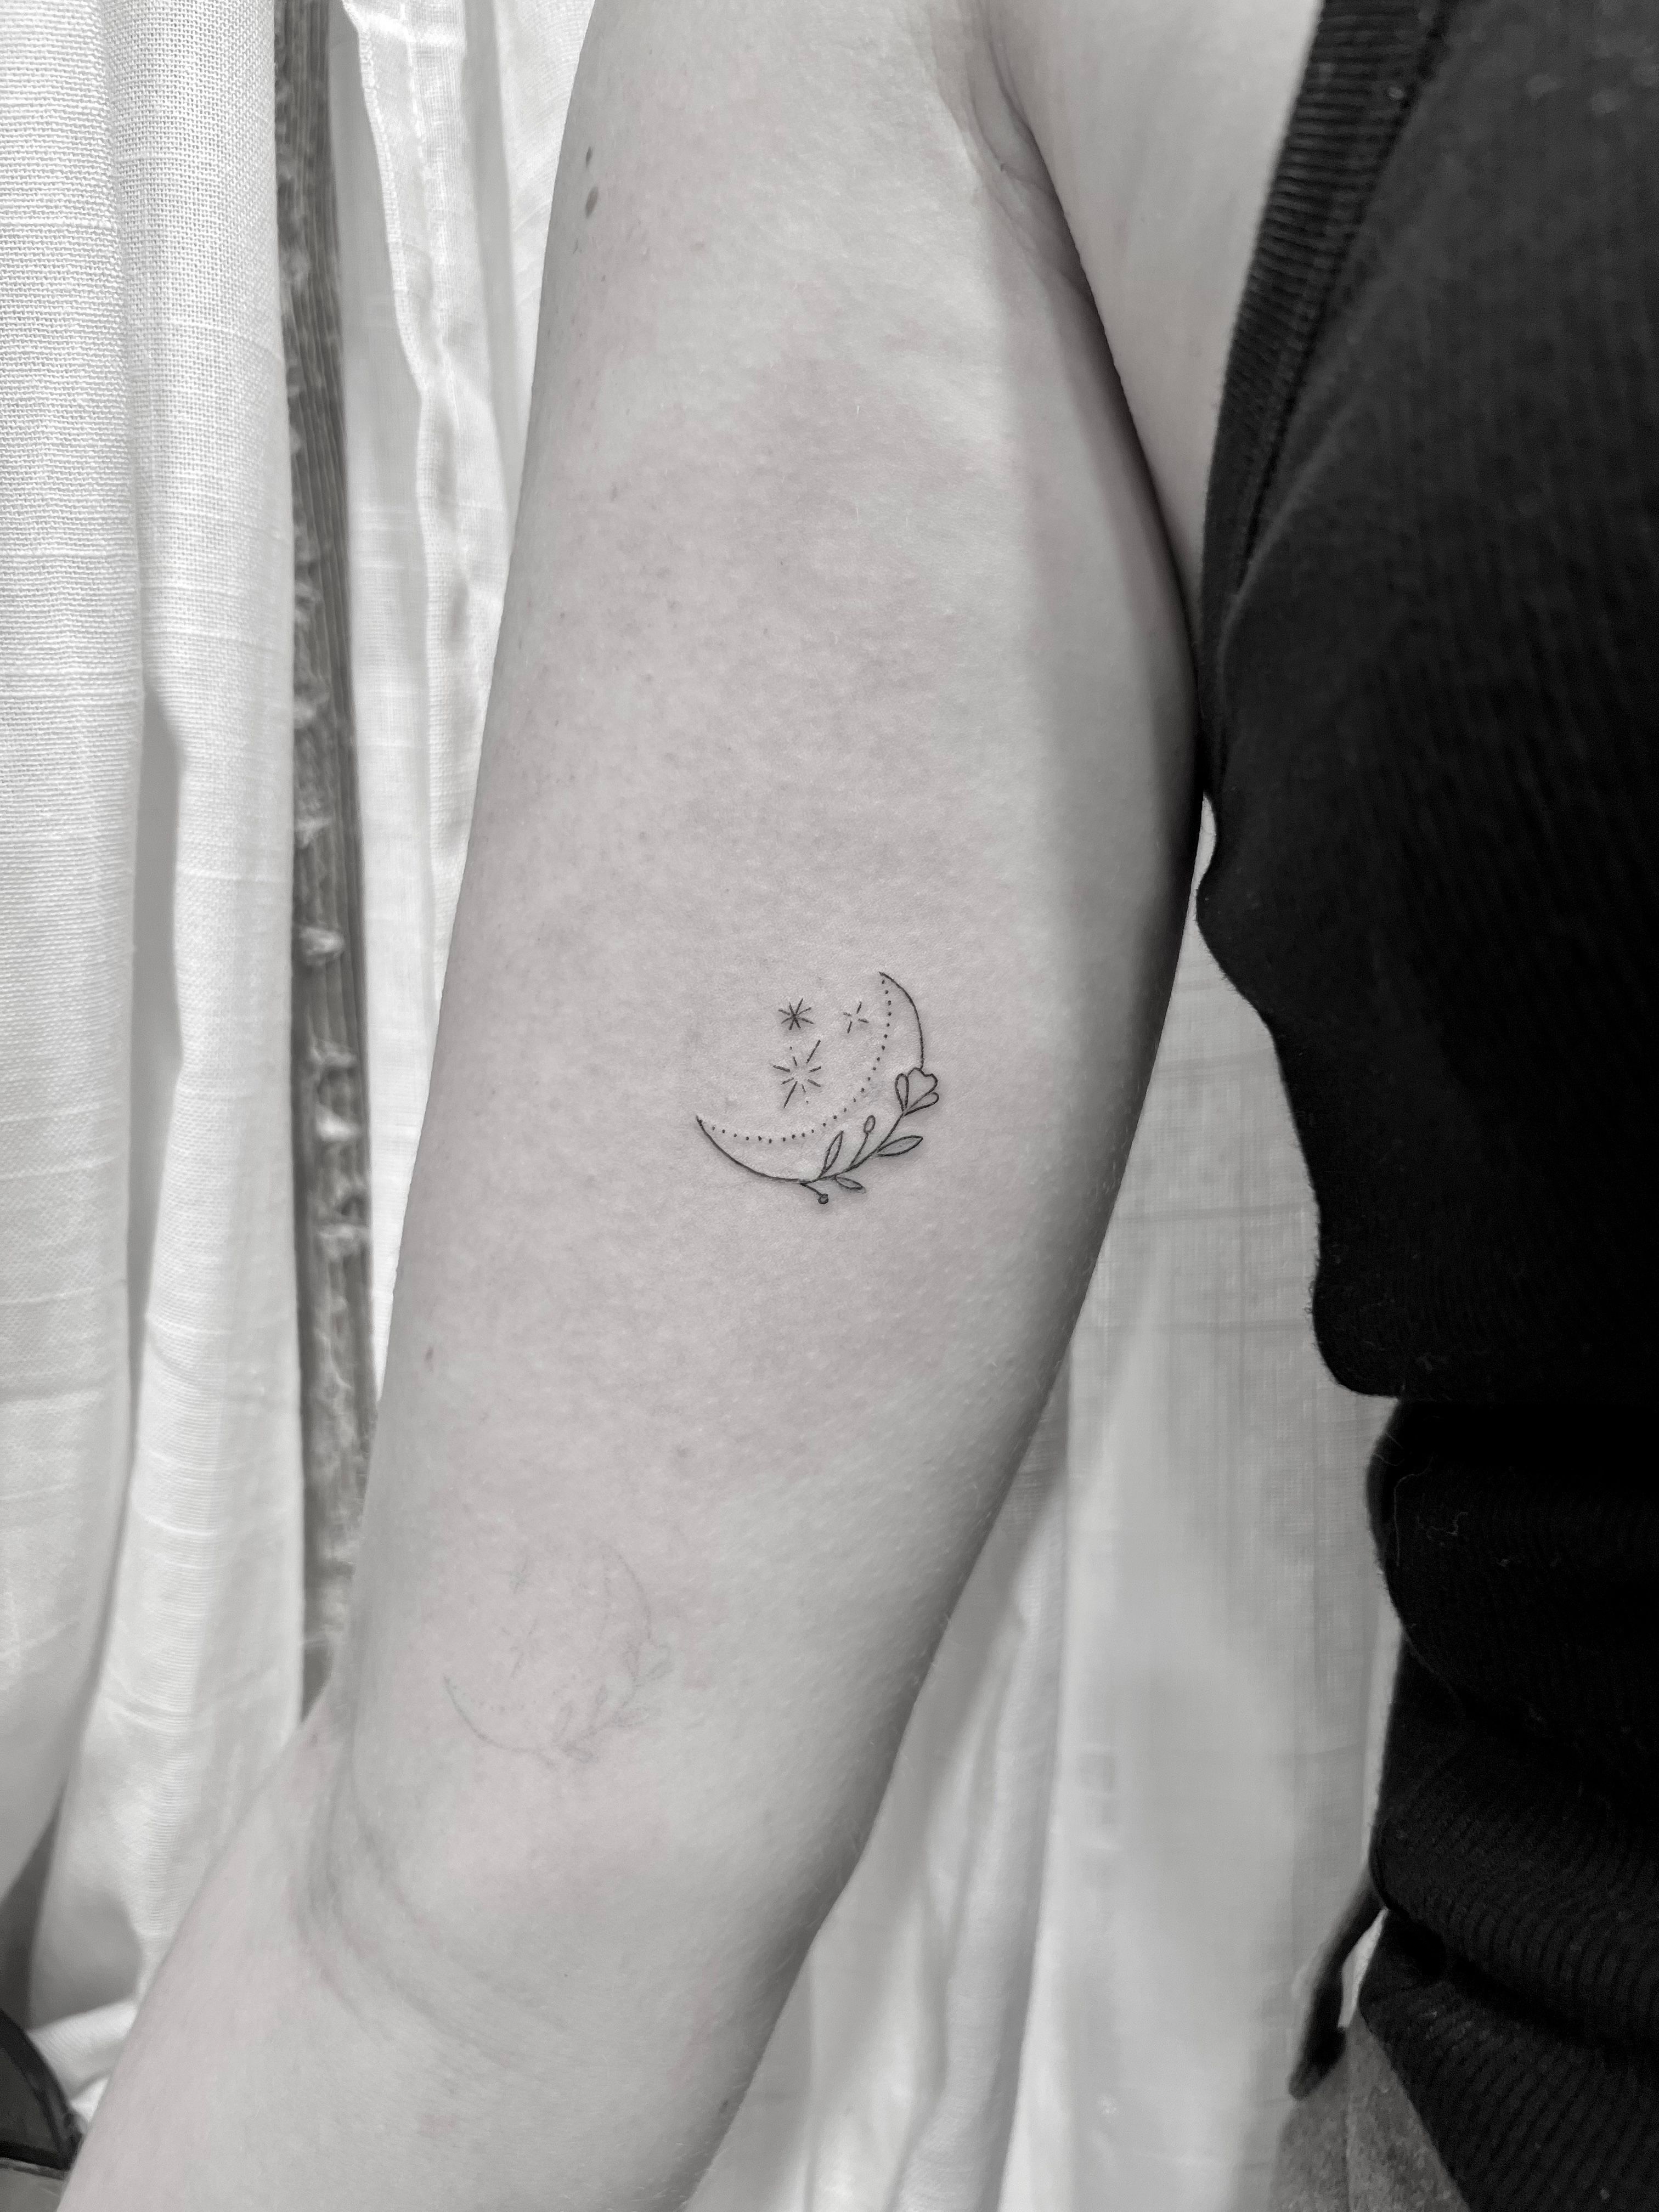 Guddu Tattoos - Flower with moon tattoo Done by : Art of... | Facebook